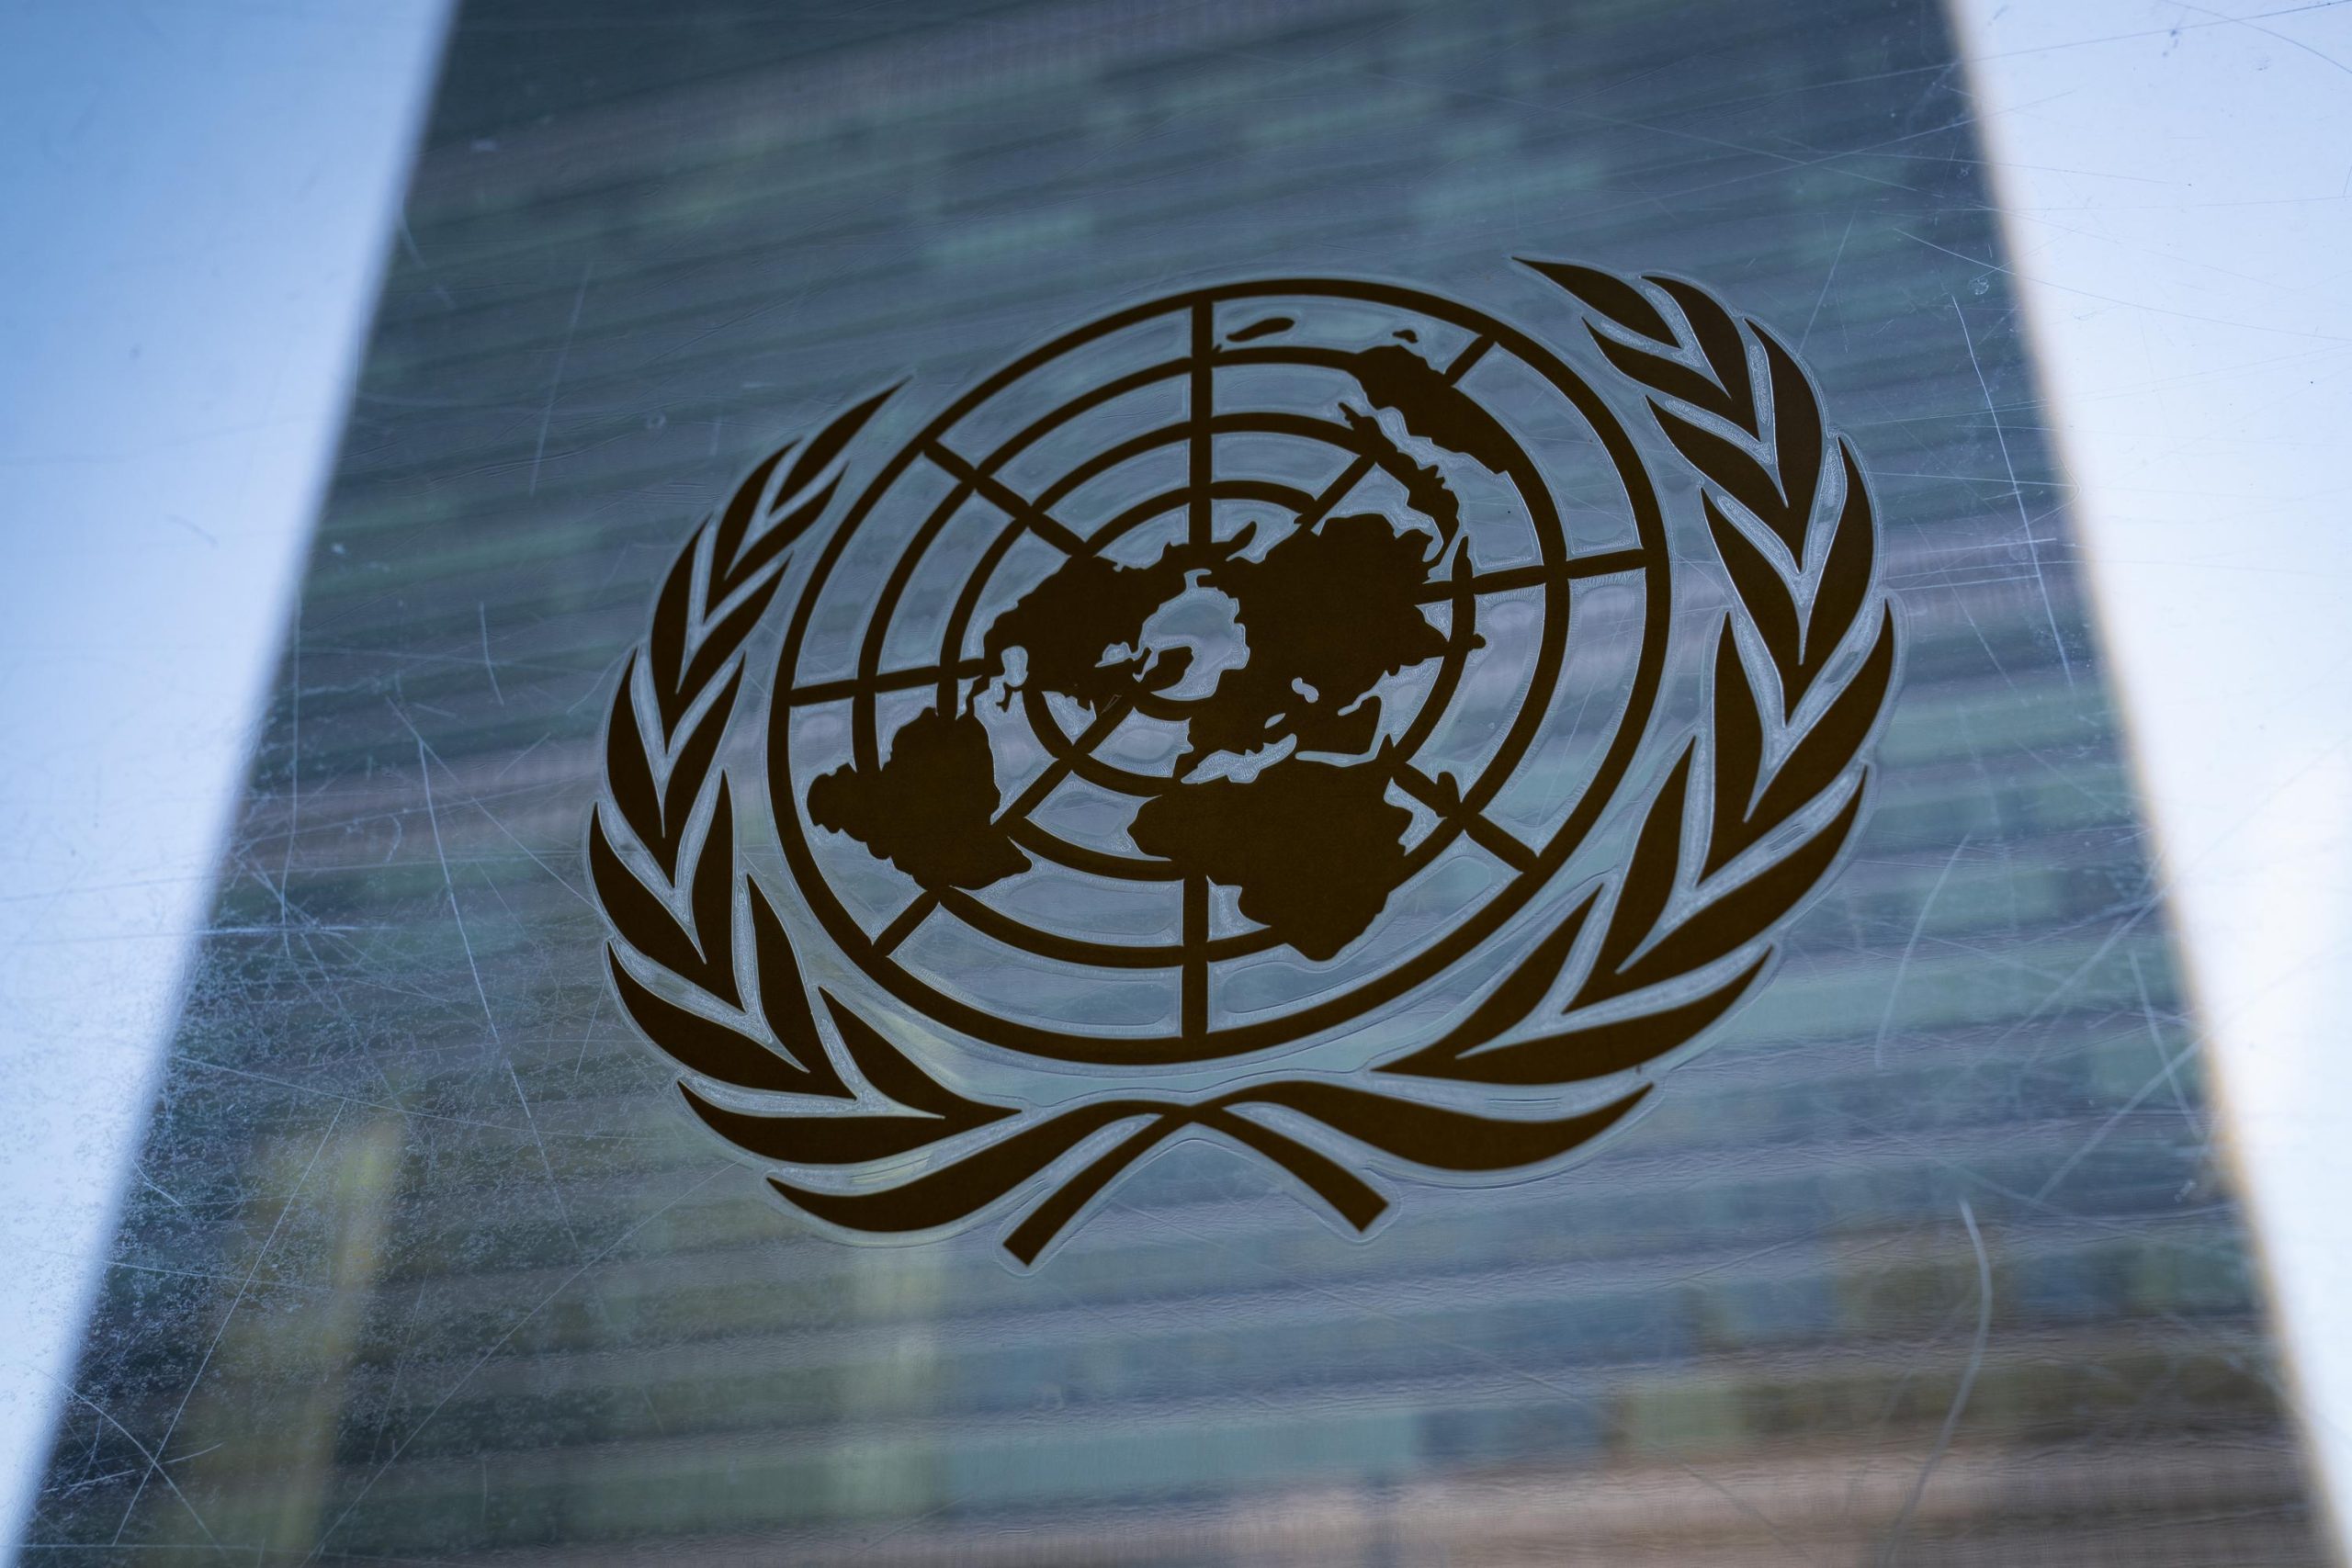 The United Nations’ Secret Agenda: Targeted Depopulation Measures and Global Control